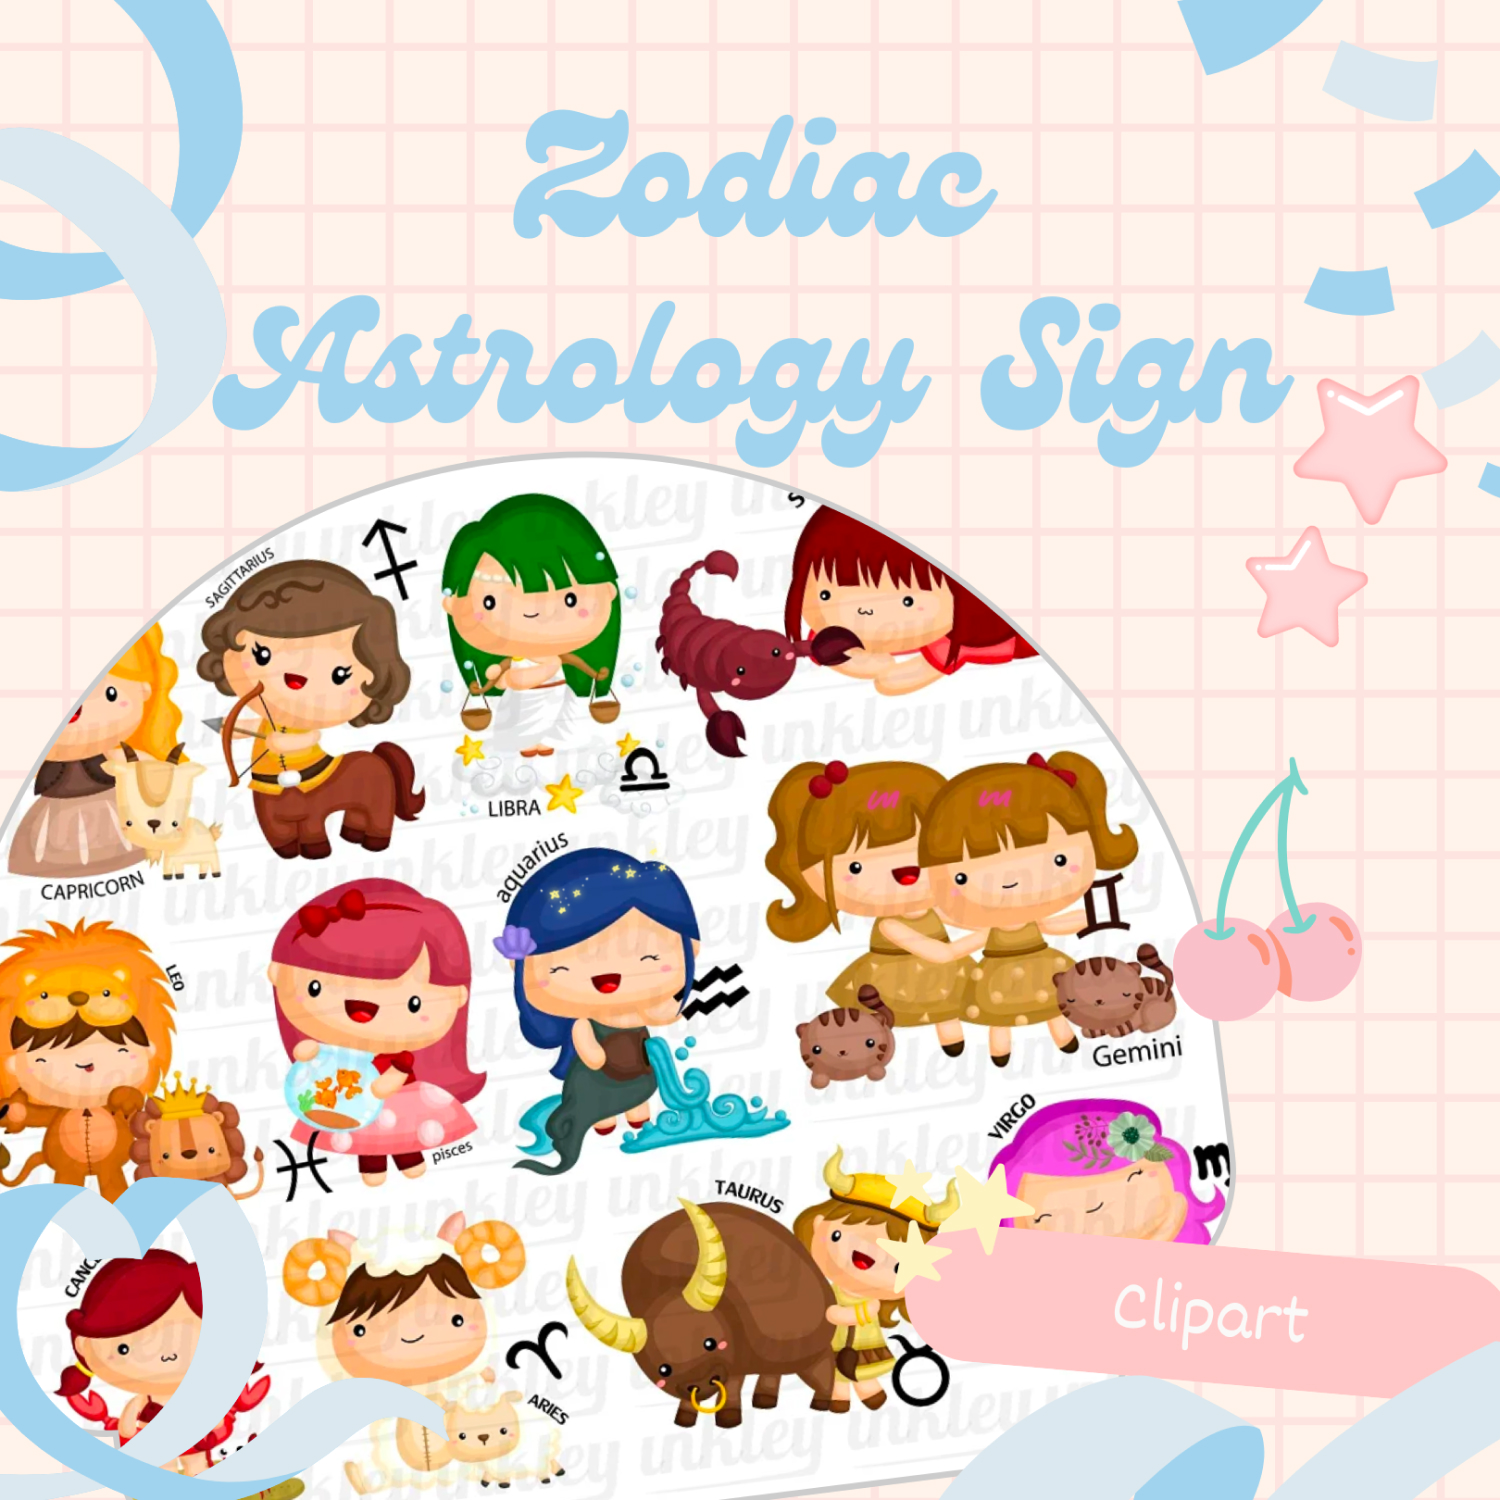 Zodiac Astrology Sign Clipart.